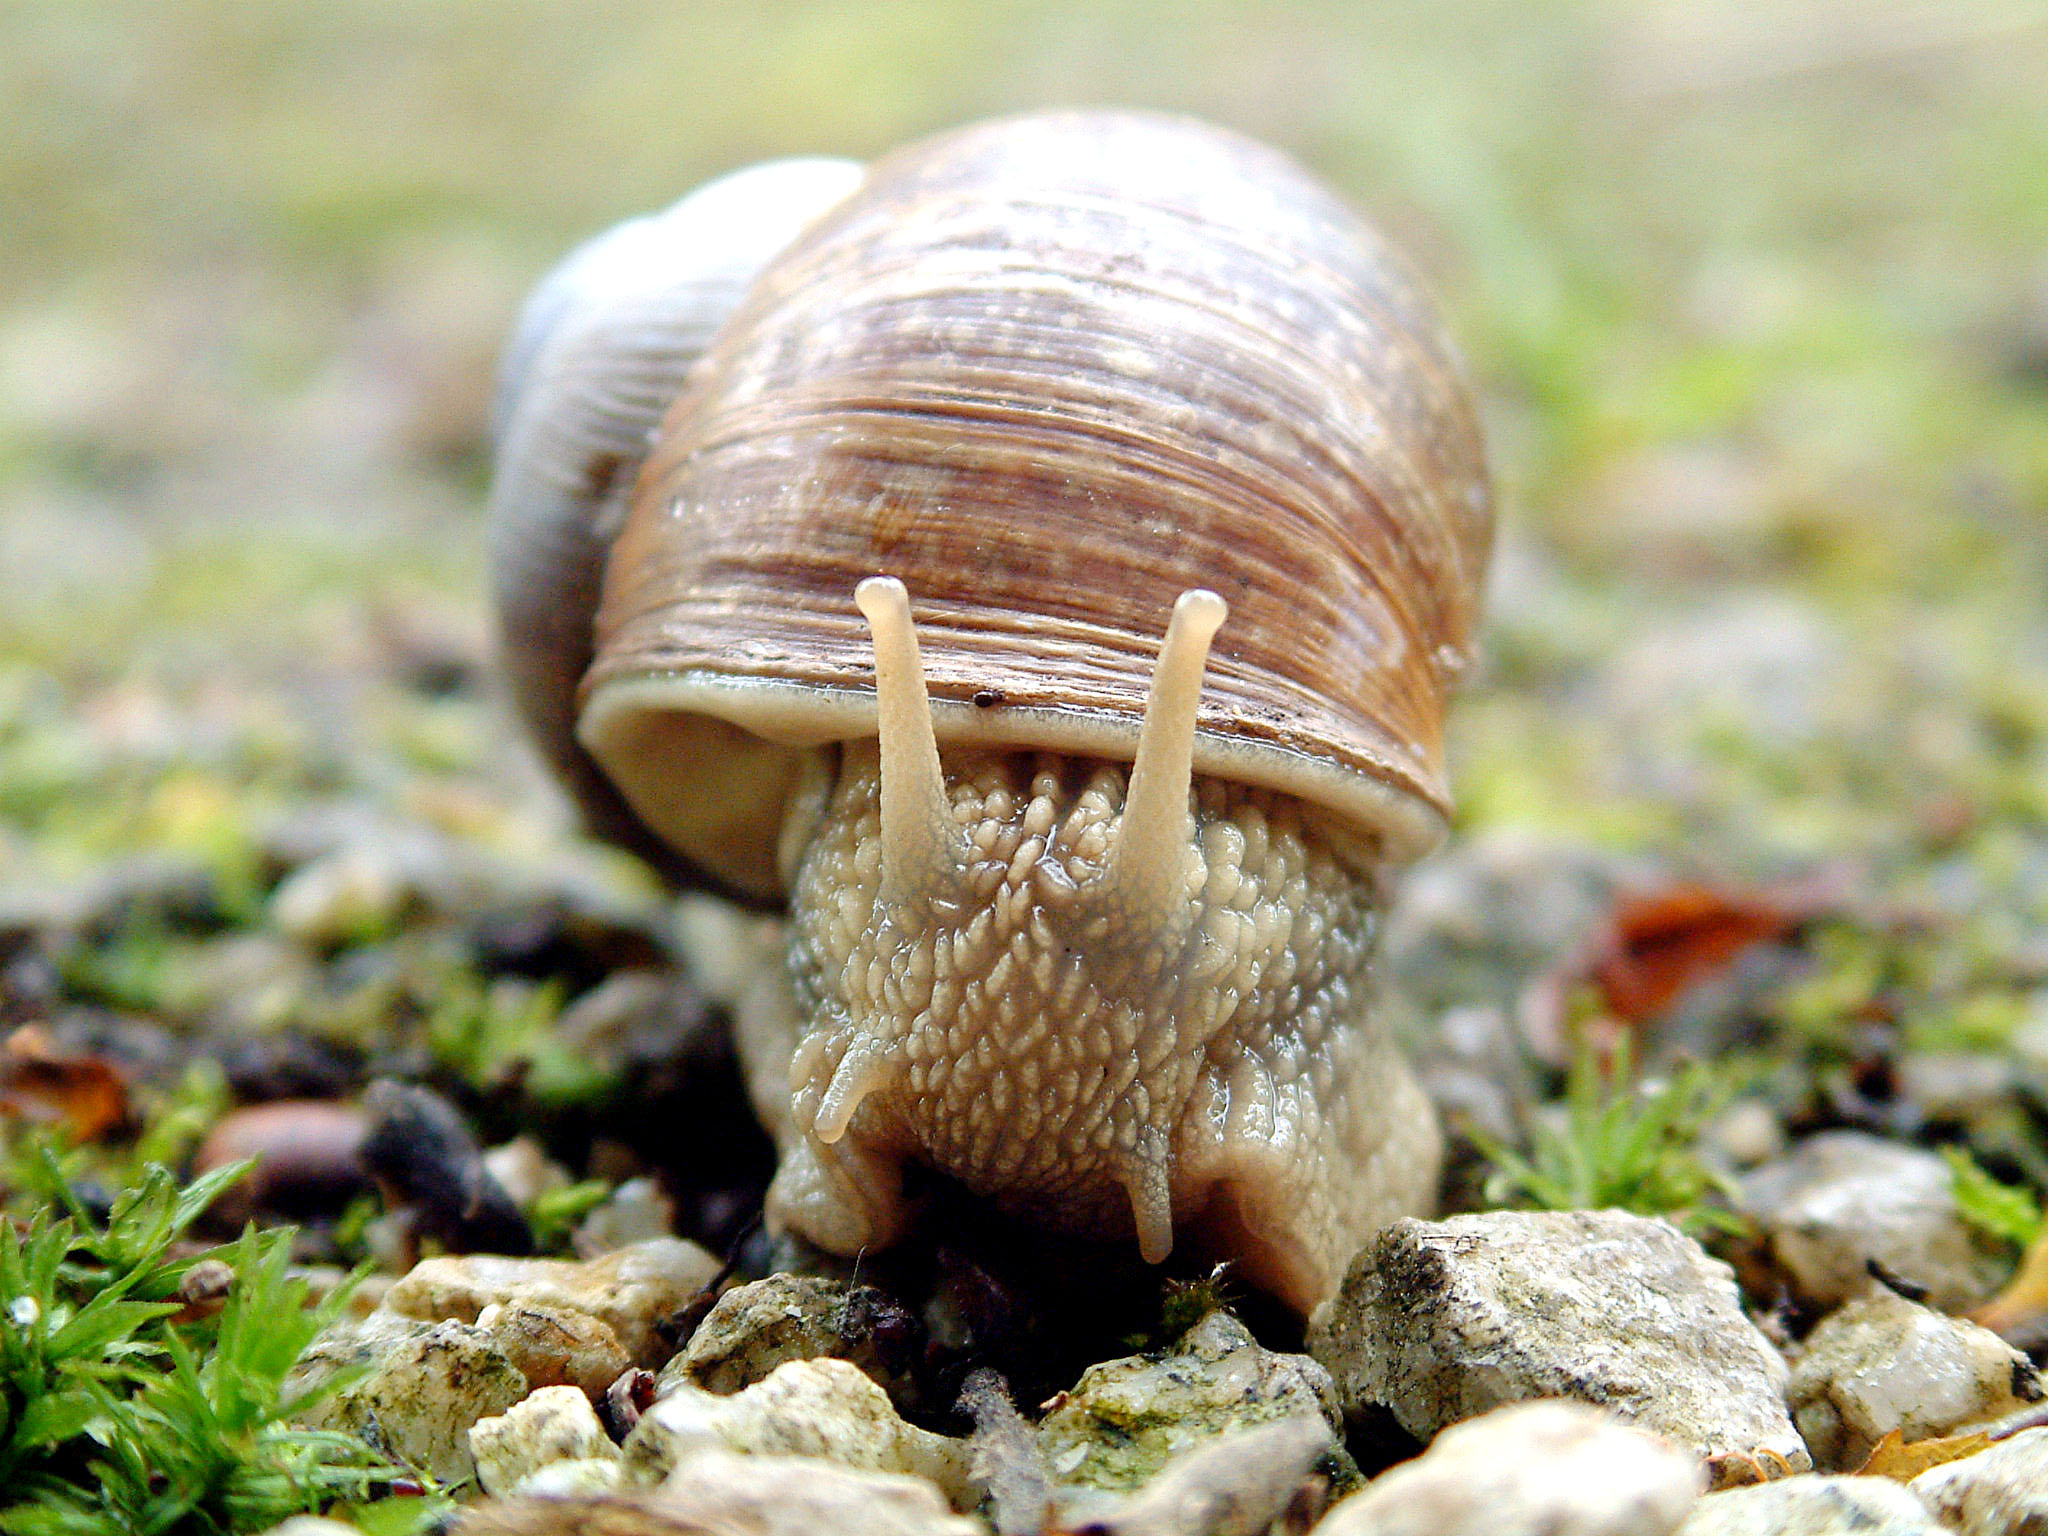 File:Closeup of snail in fishtank.jpg - Wikimedia Commons